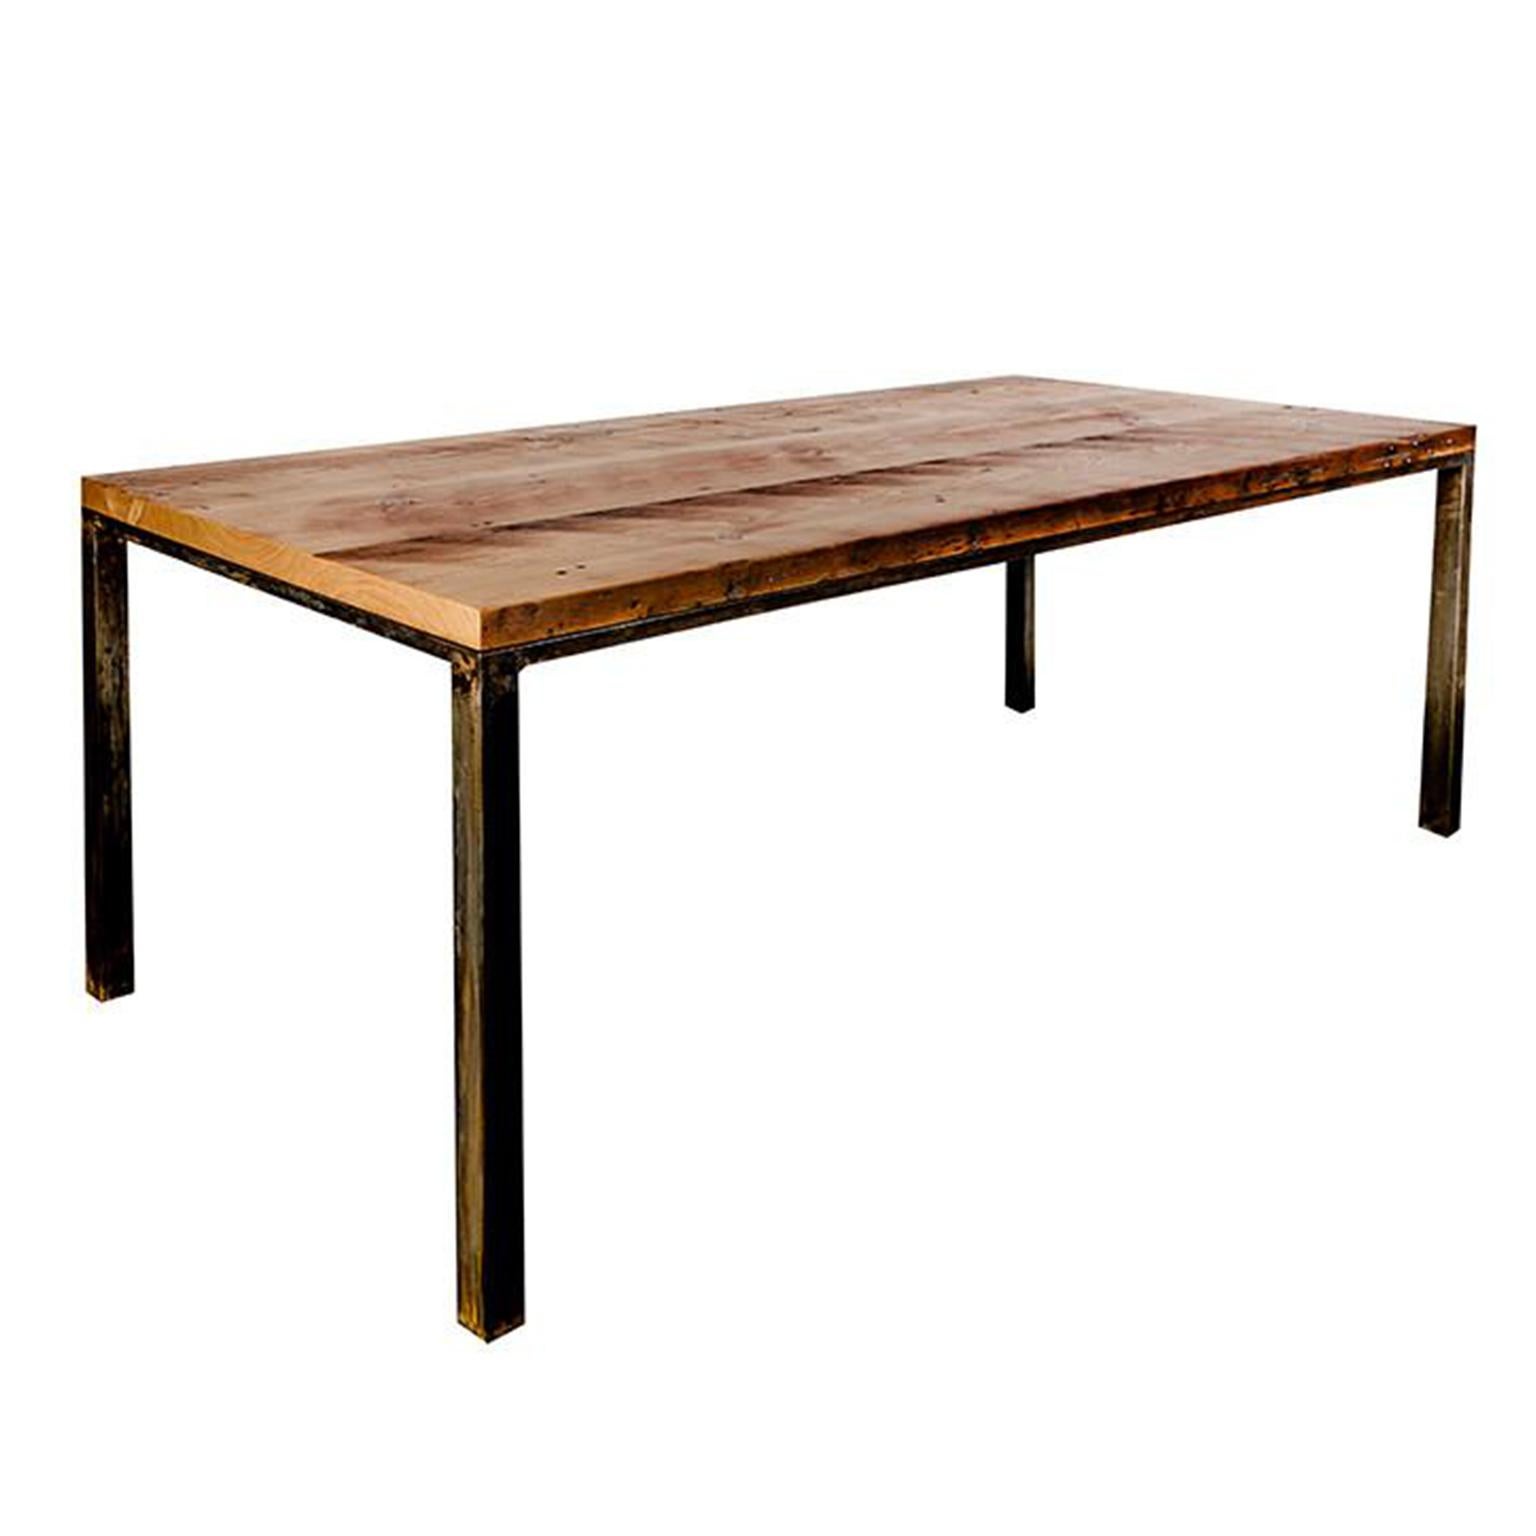 Custom Industrial "Workshop Table" with Solid Wood Top and Steel Base, Medium